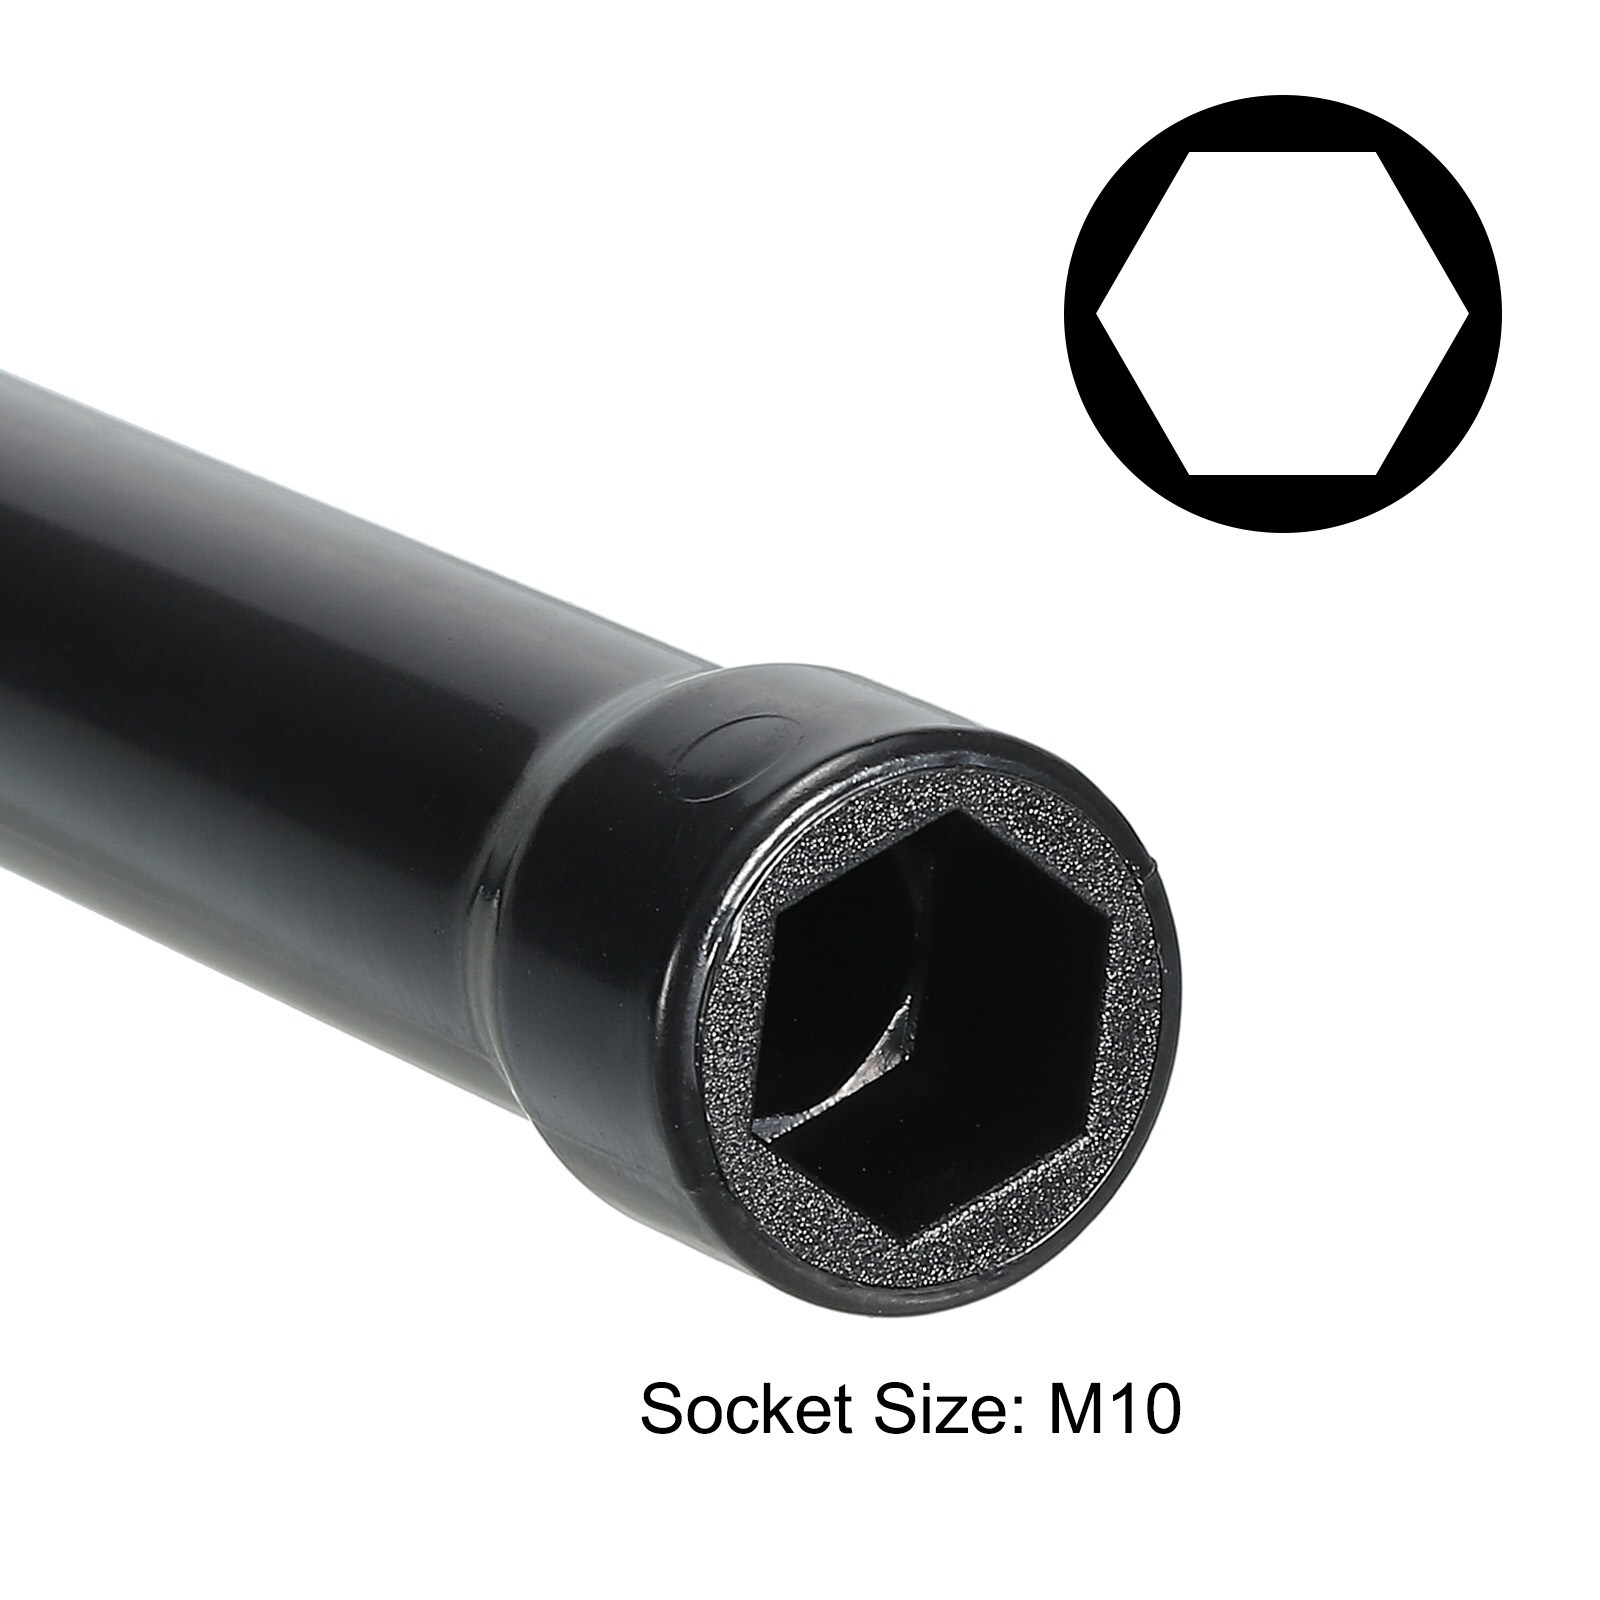 Faucet Installer Socket, M10 Wrench Plumbing Tool for Bowl Sink, Black 4 Pack